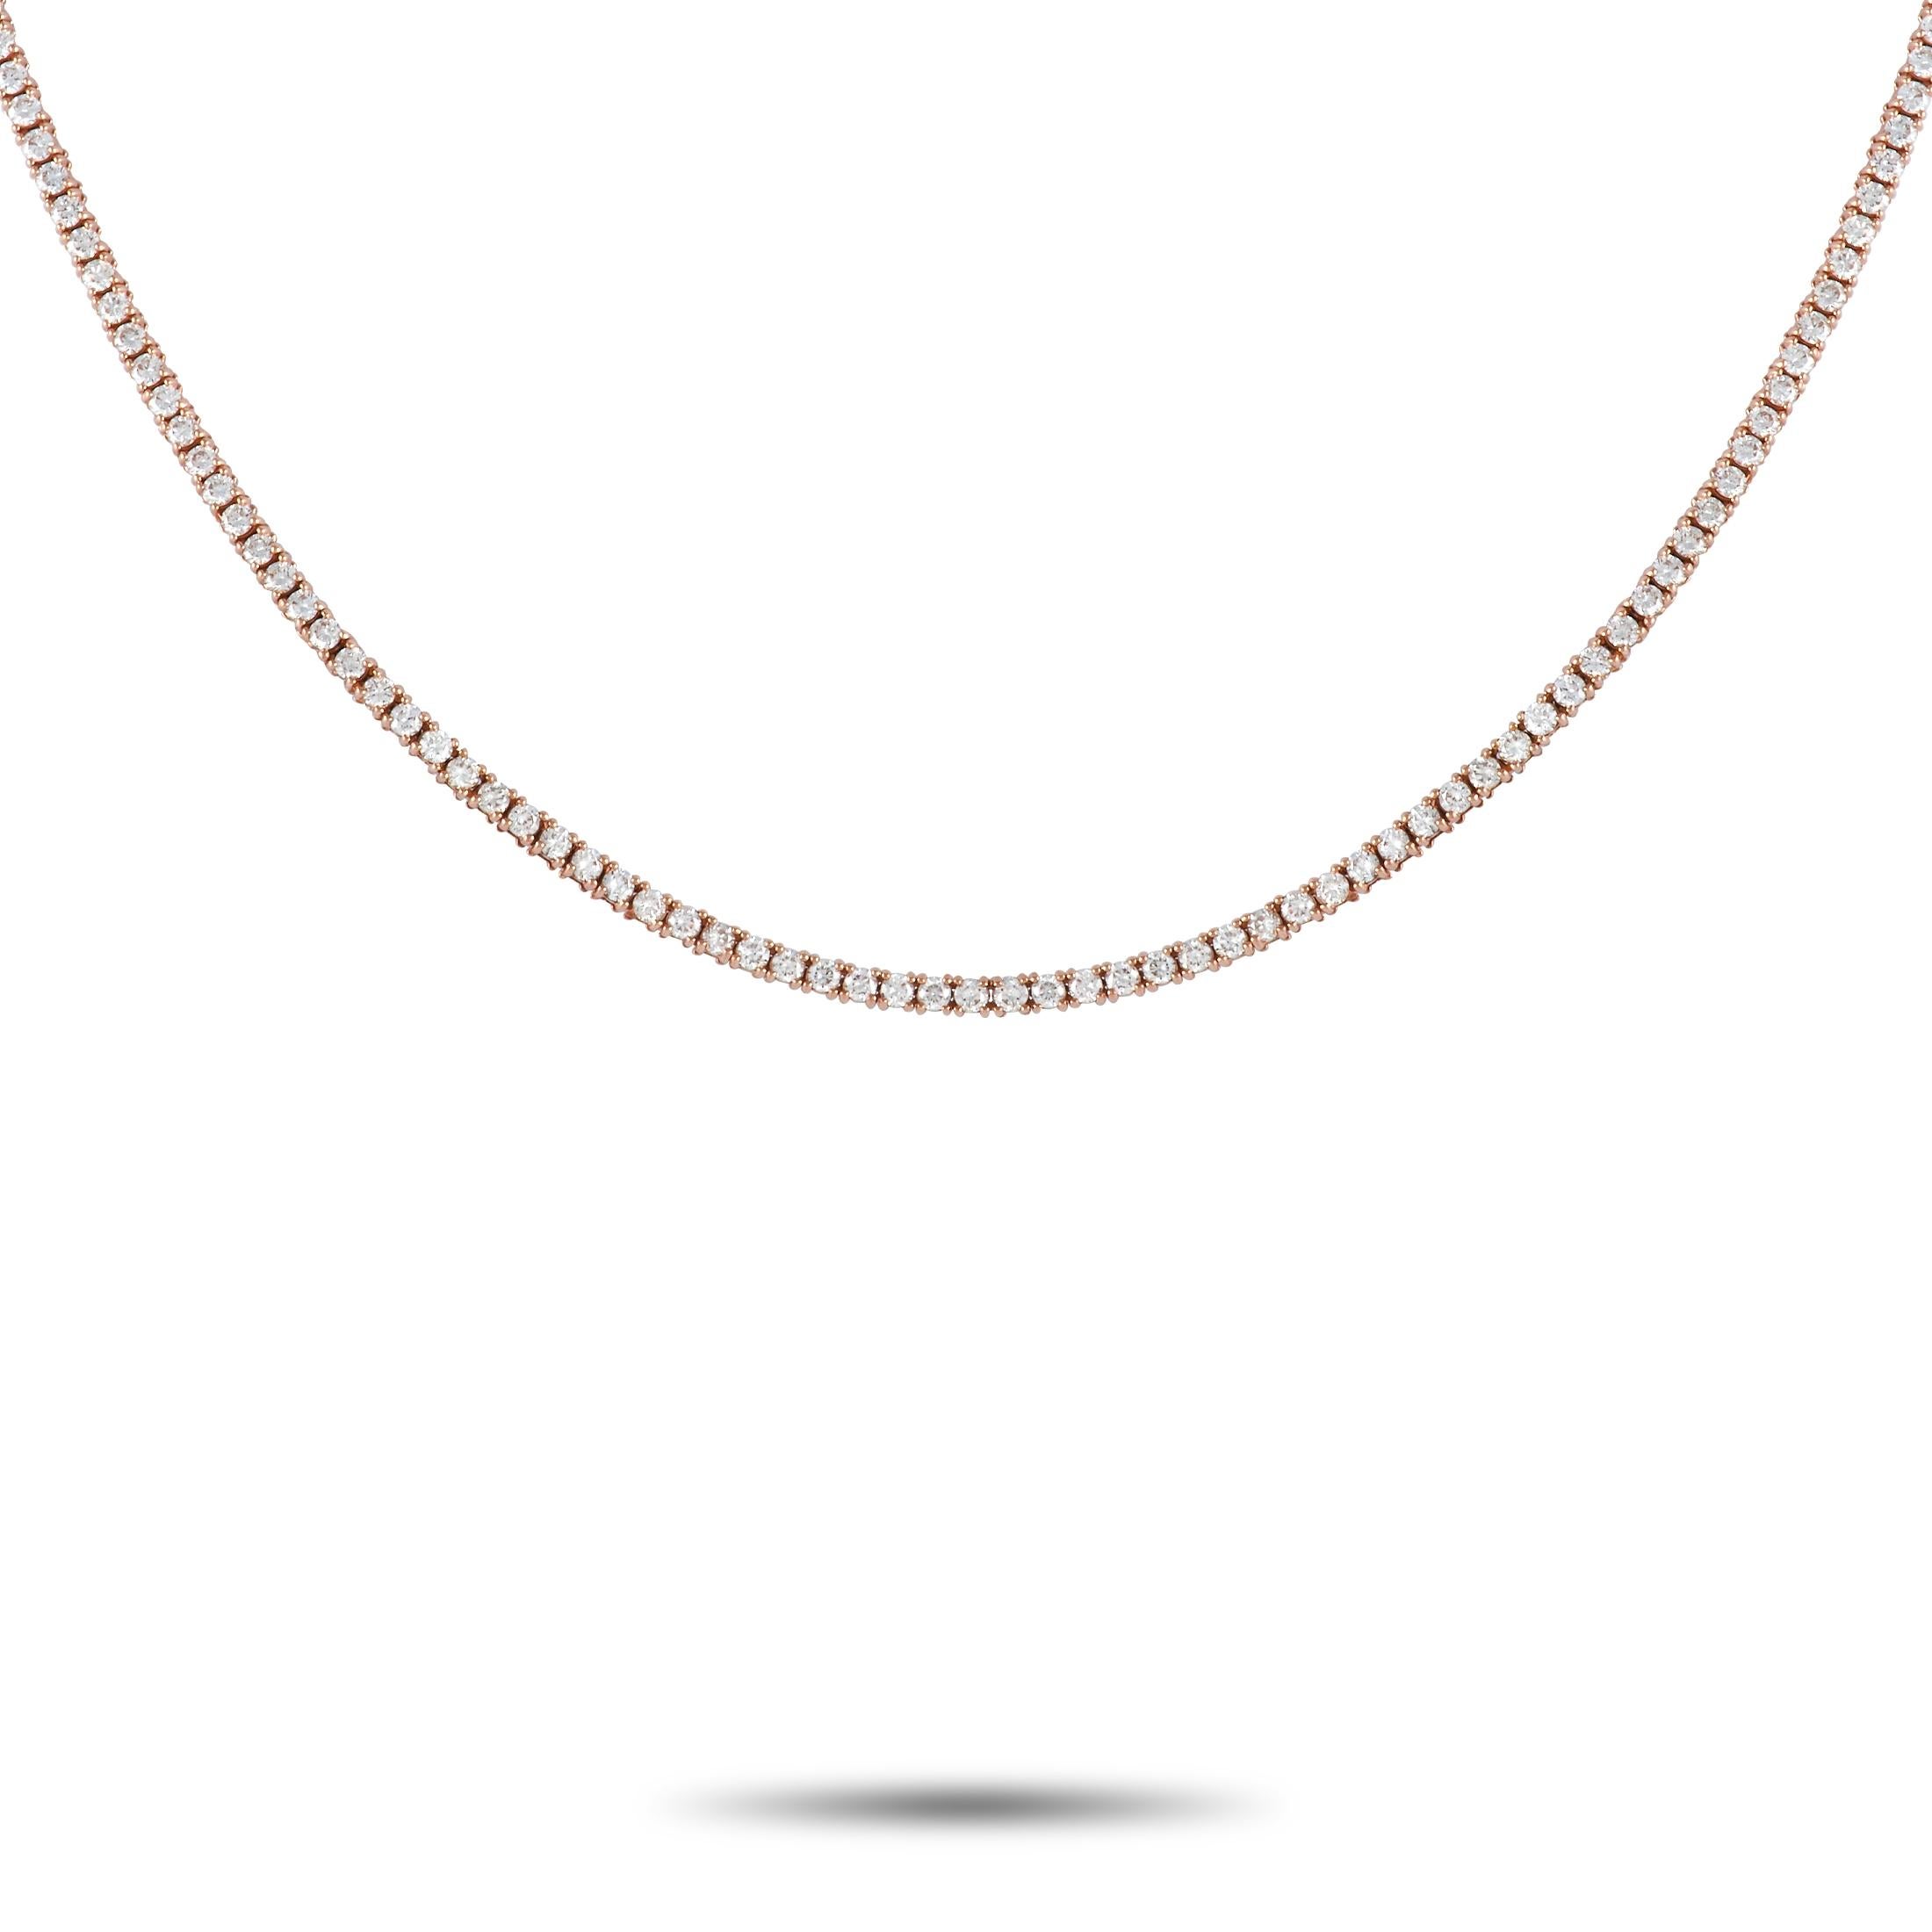 lb exclusive 18k rose gold 3.27 ct diamond necklace.